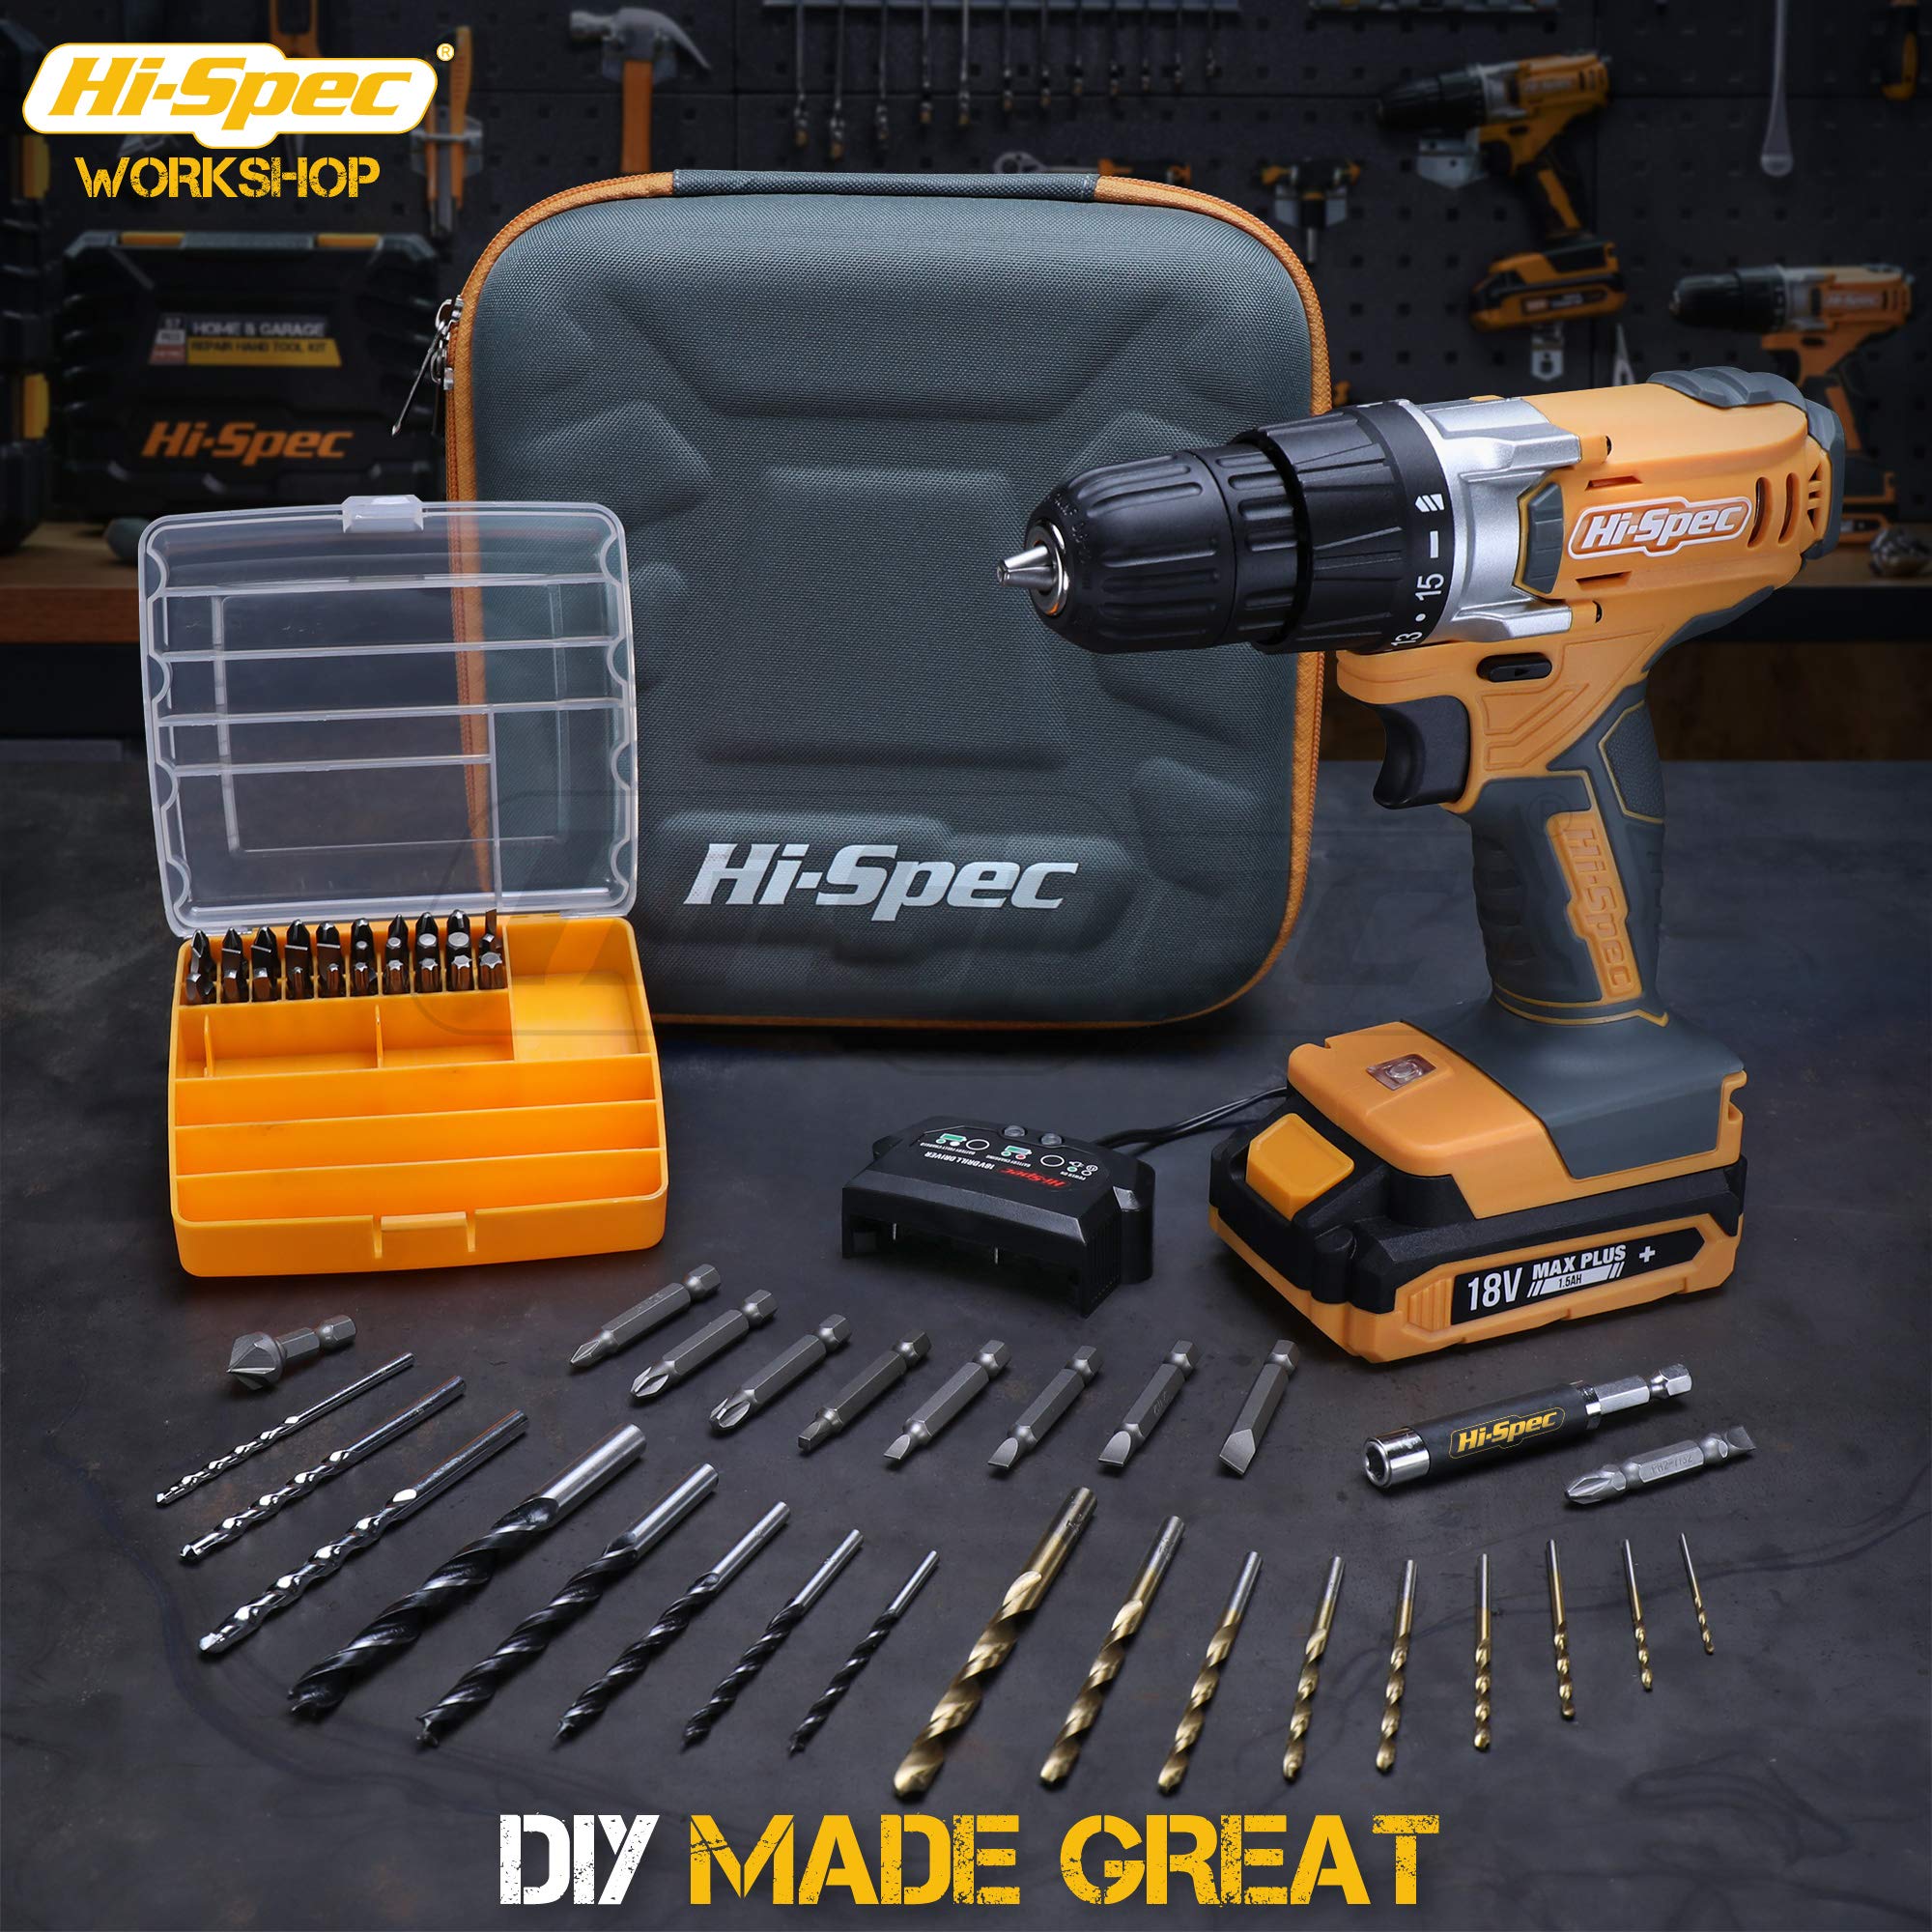 Hi-Spec 58pc Yellow 18V Cordless Power Drill Driver, Bit Set & Case. Complete Home & Garage DIY Tool